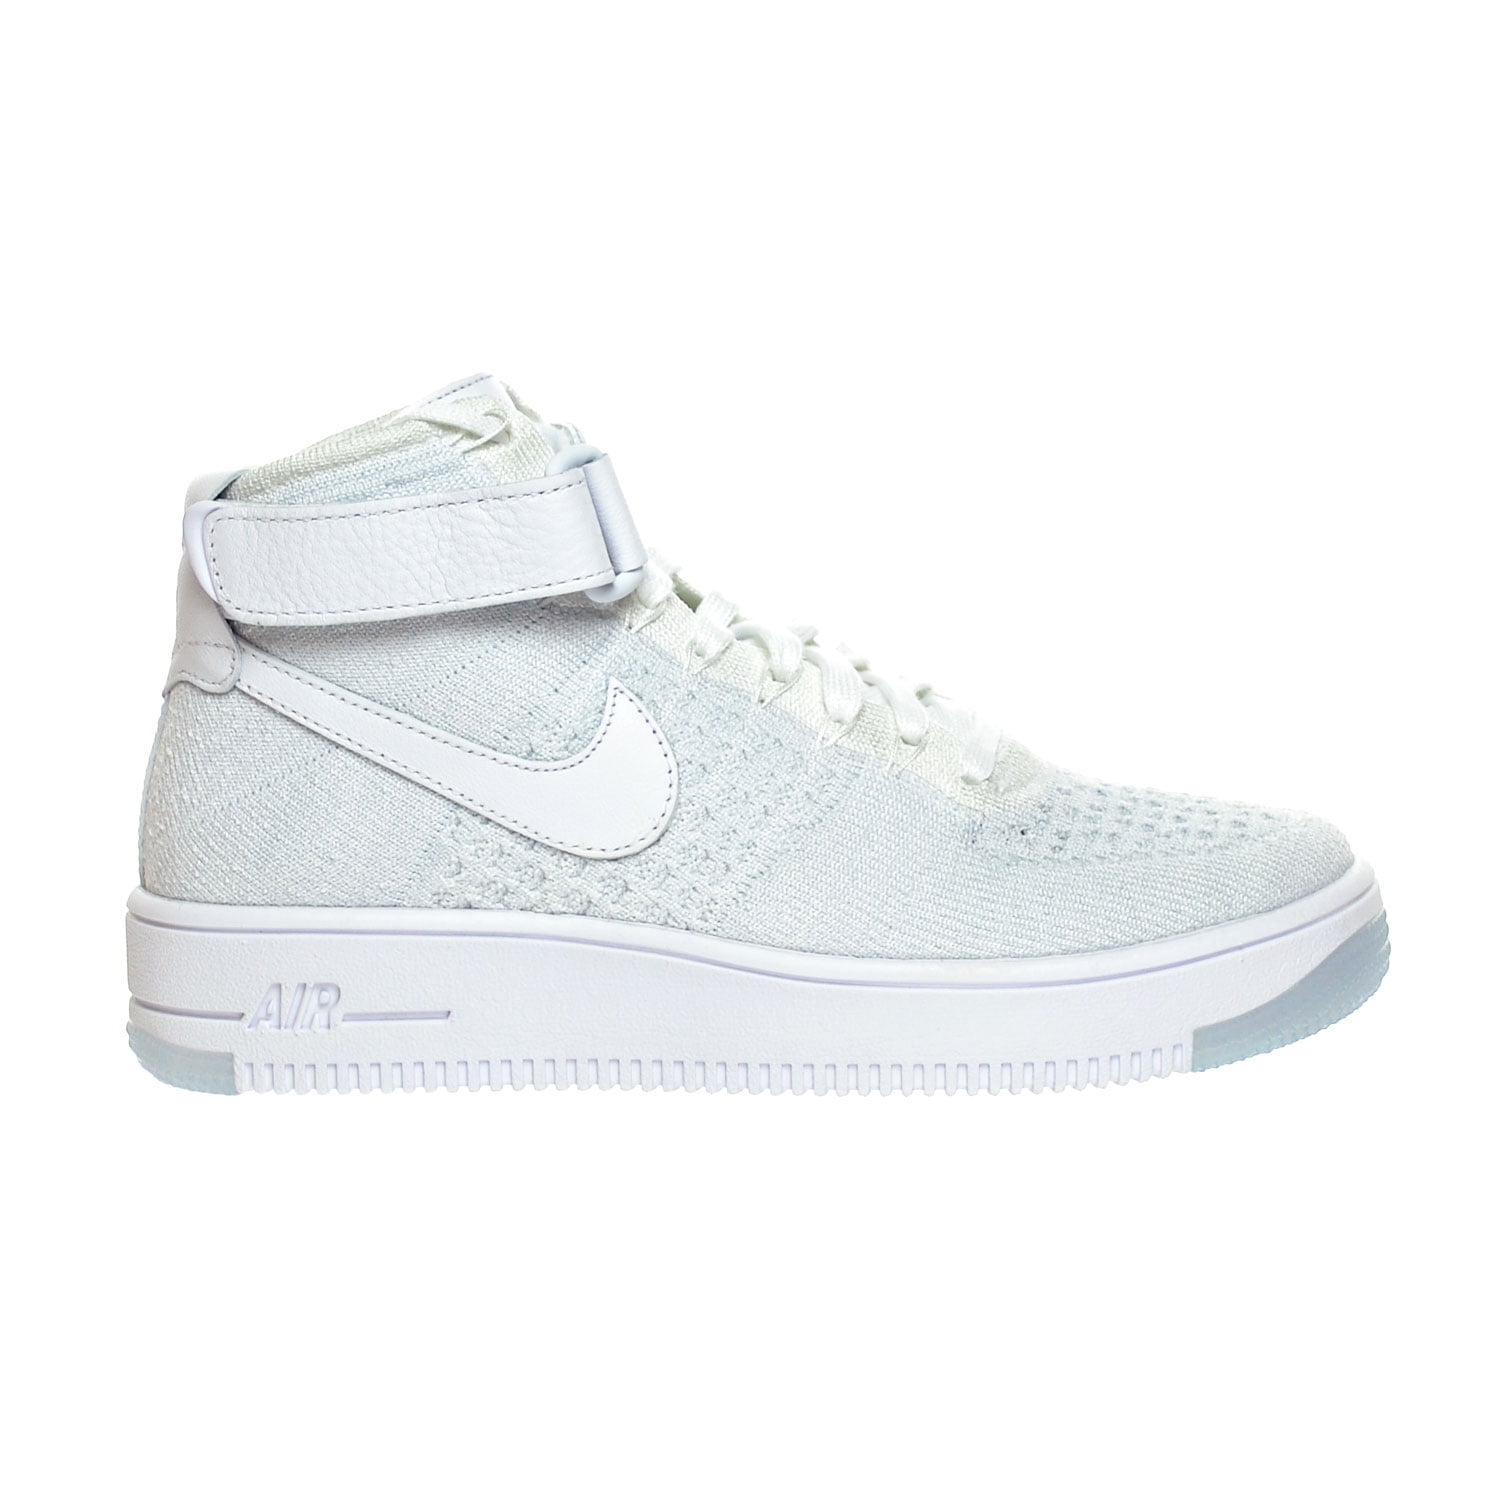 Nike AF1 Flyknit Shoe White/Pure Platinum 818018-100 - Walmart.com